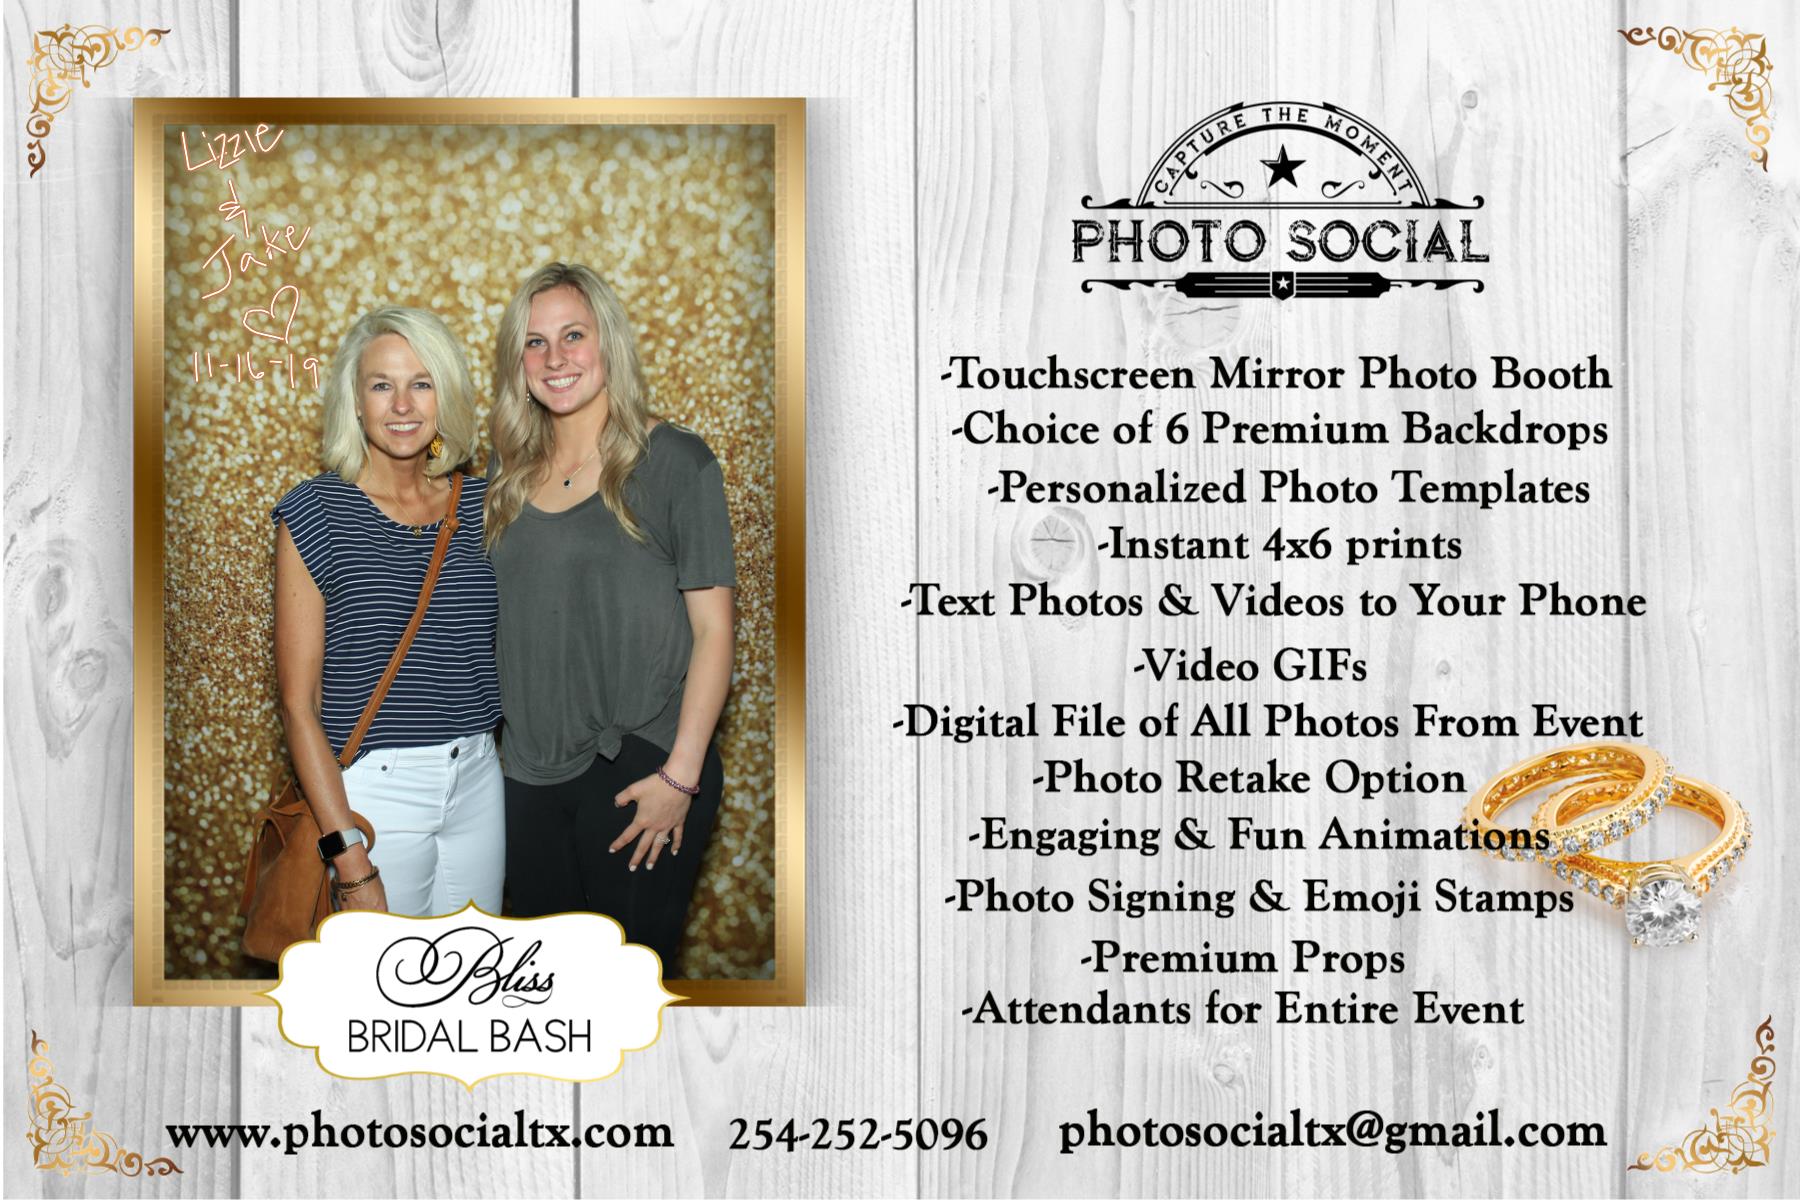 Photo Social photo booth bliss bridal bash expo bride